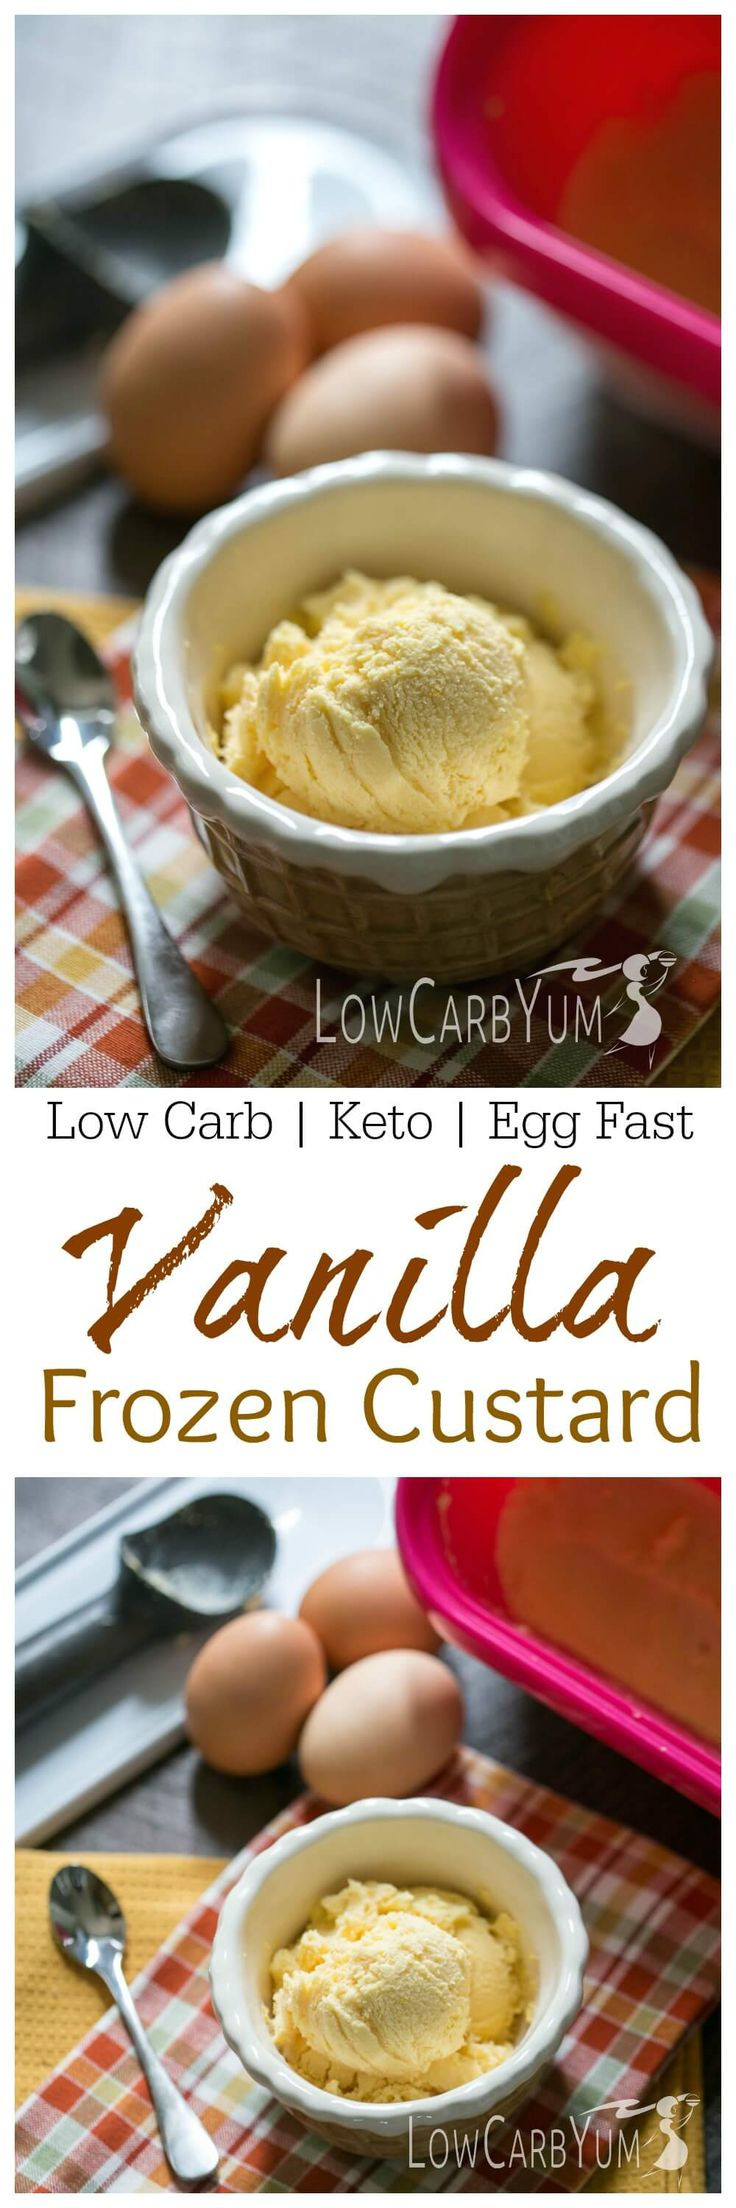 Low Carb Desserts At Restaurants
 Best 25 Keto fast food ideas on Pinterest